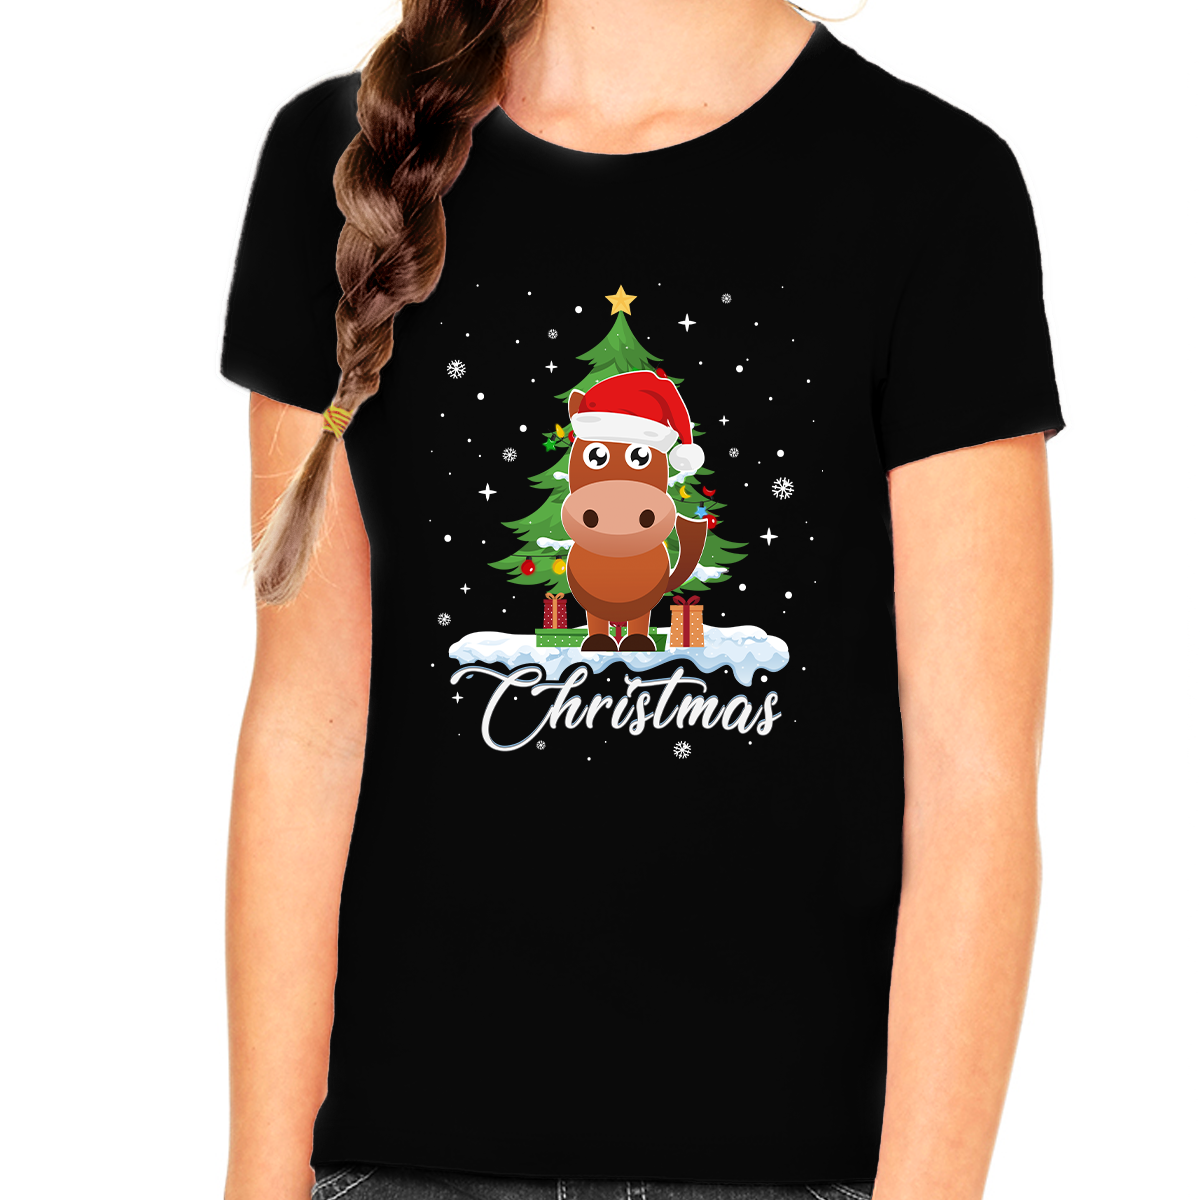 Girls Christmas Shirt Cute Cartoon Horse Christmas Outfits for Girls Christmas Shirts for Kids